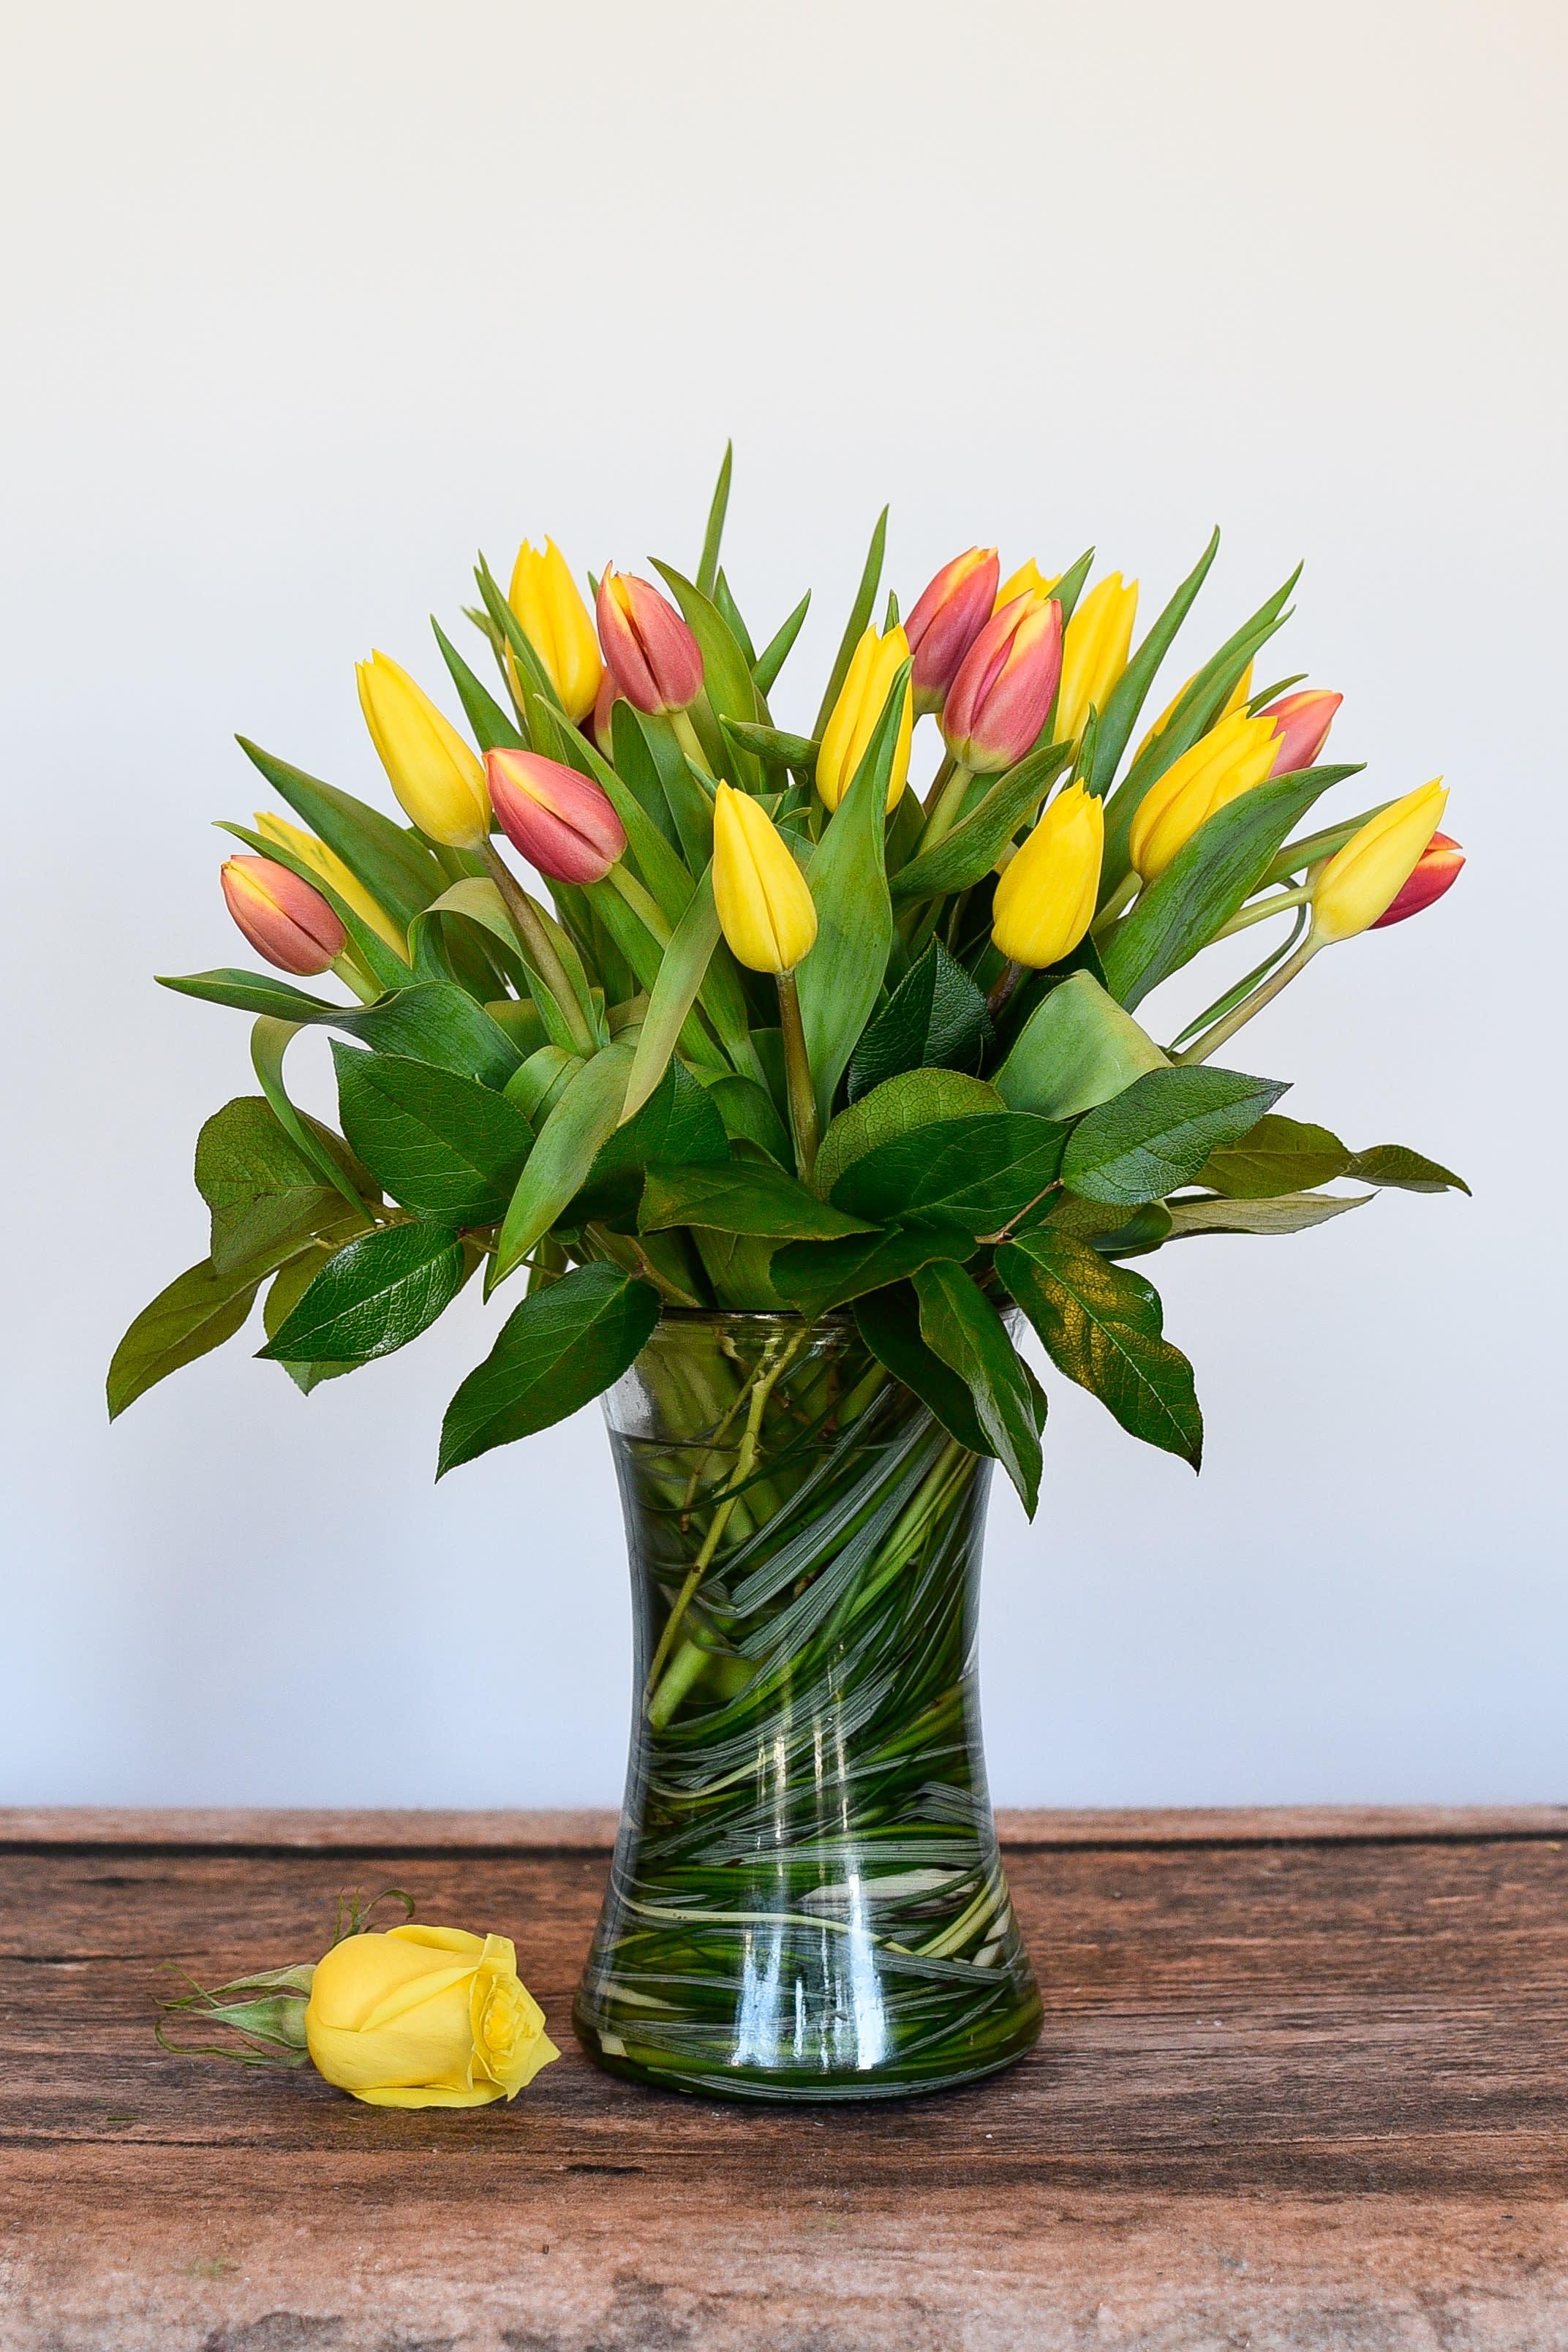 Tulips - A seasonal favorite, in an array of colors, elegantly arranged. 